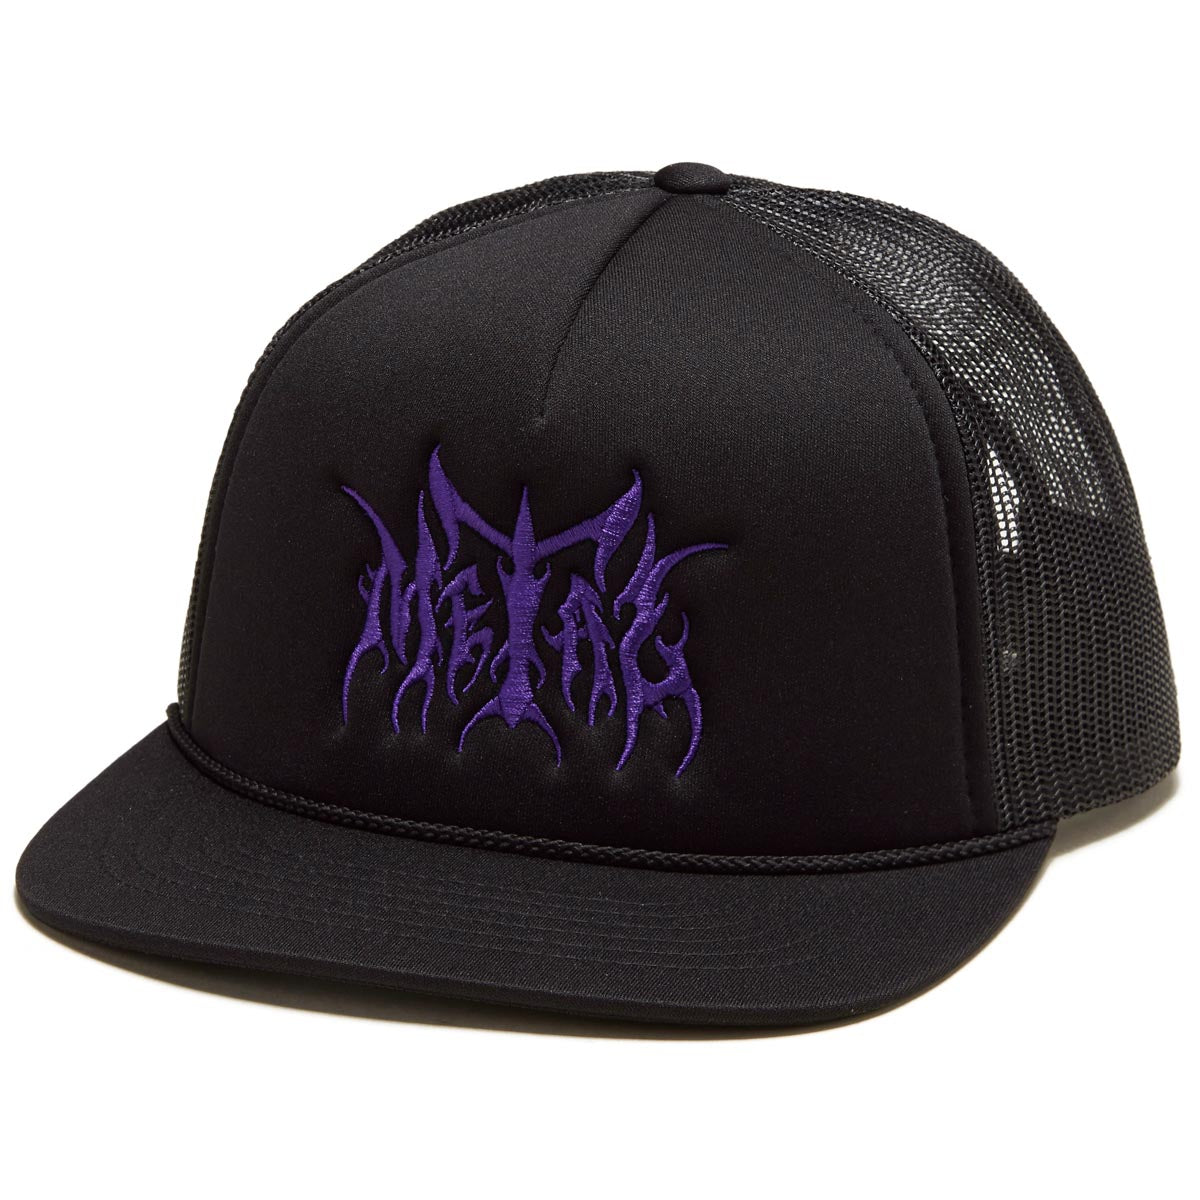 Metal Logo Trucker Hat - Black/Purple image 1